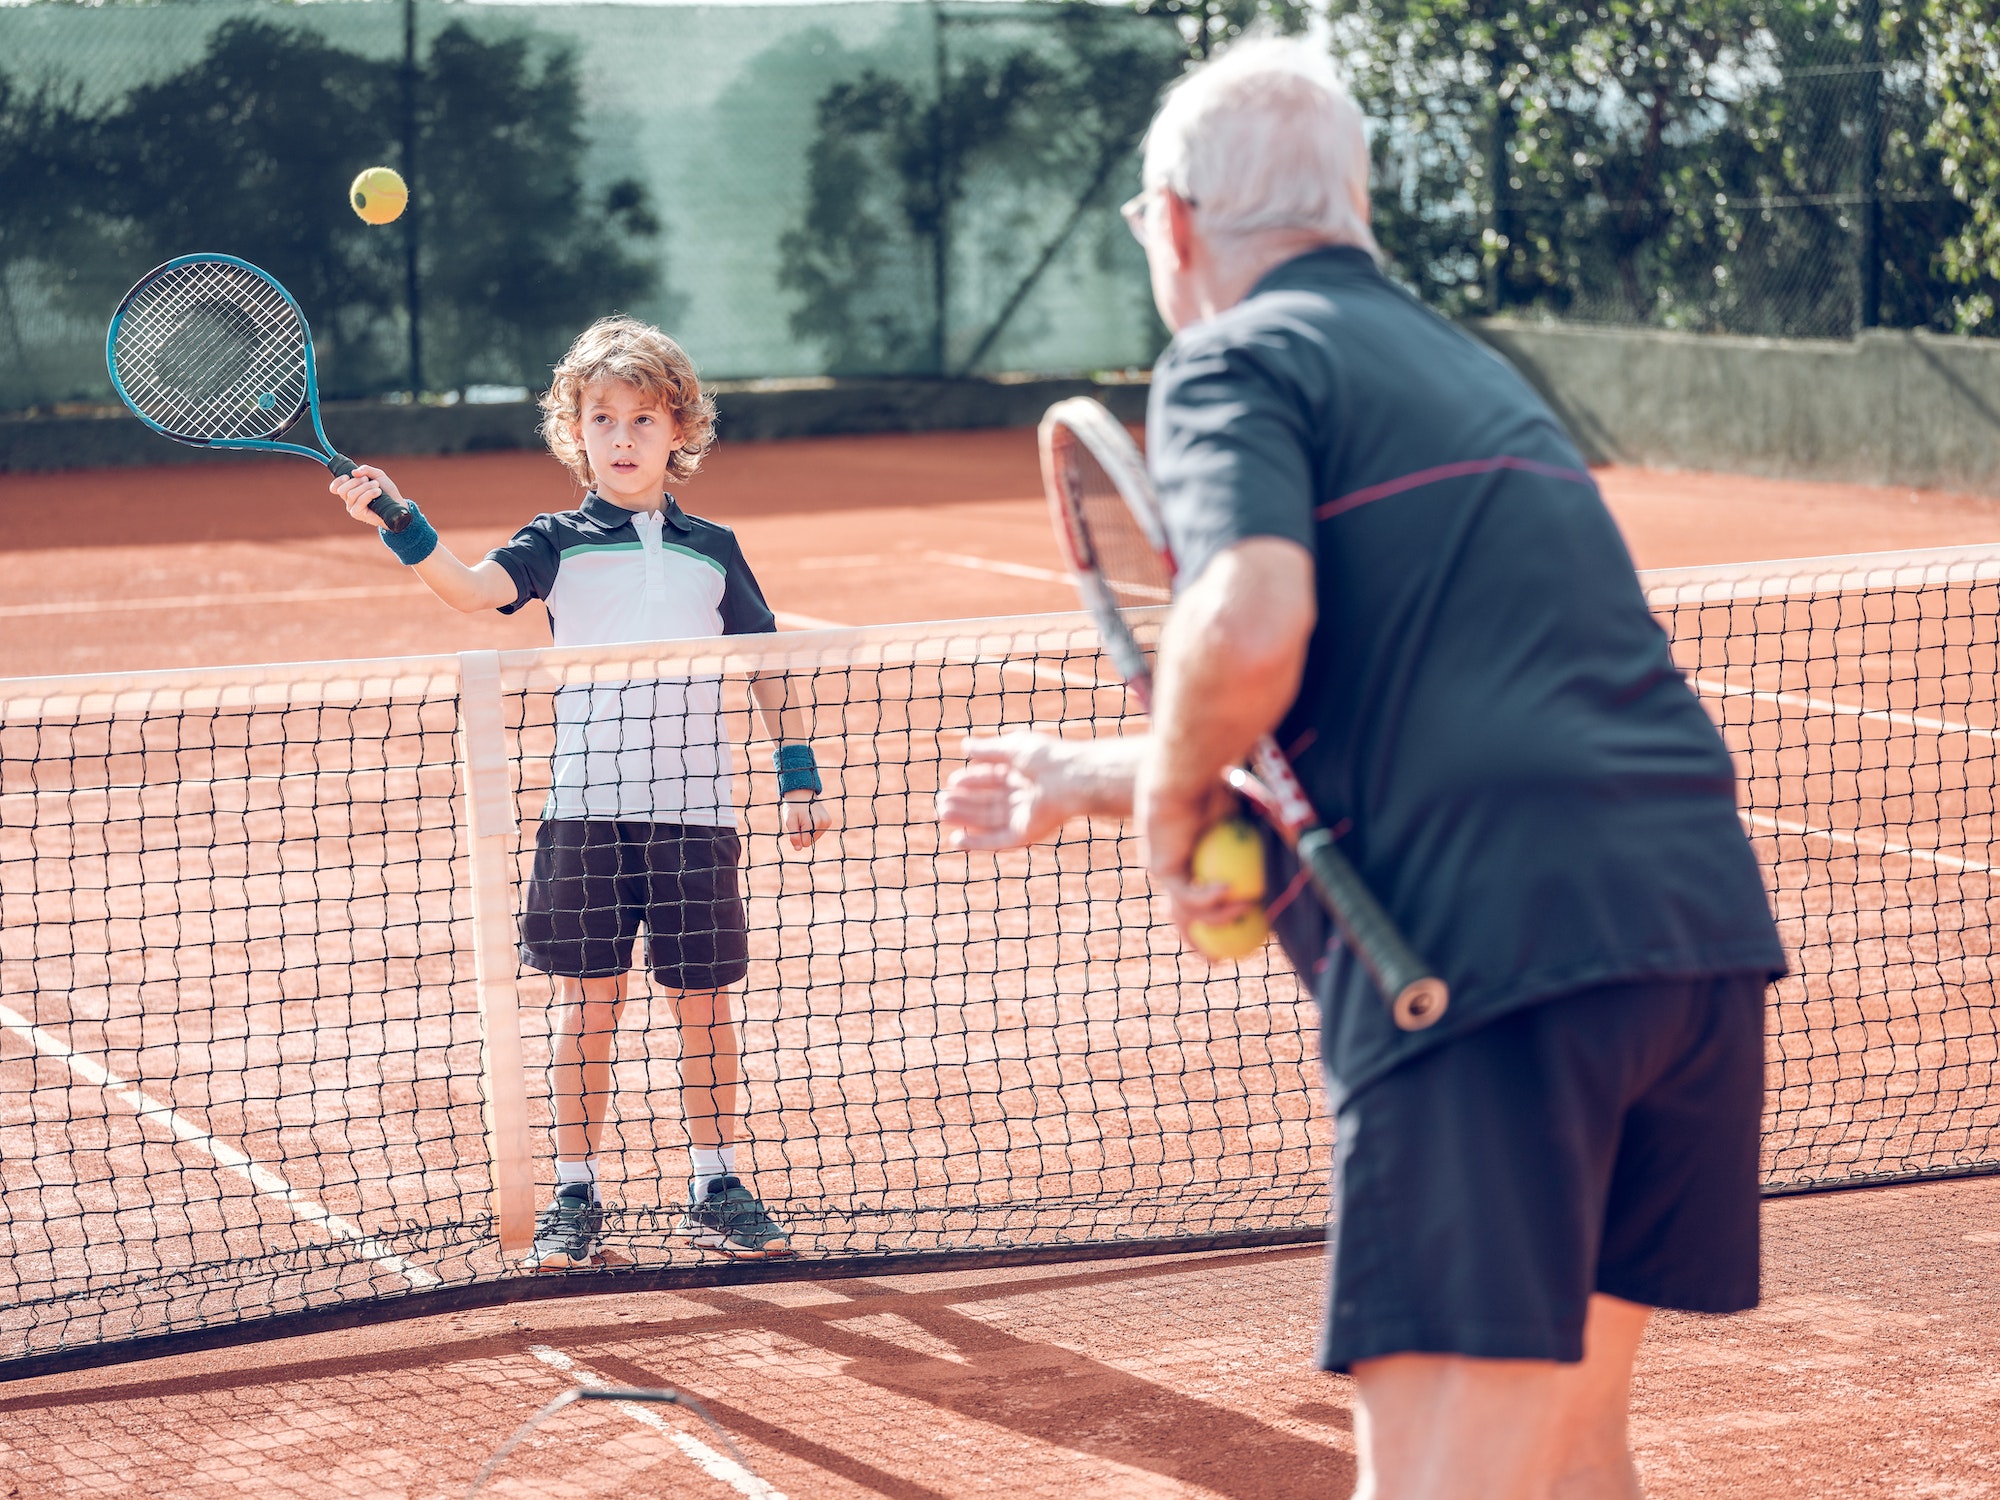 Aged tennis player teaching cute kid on court